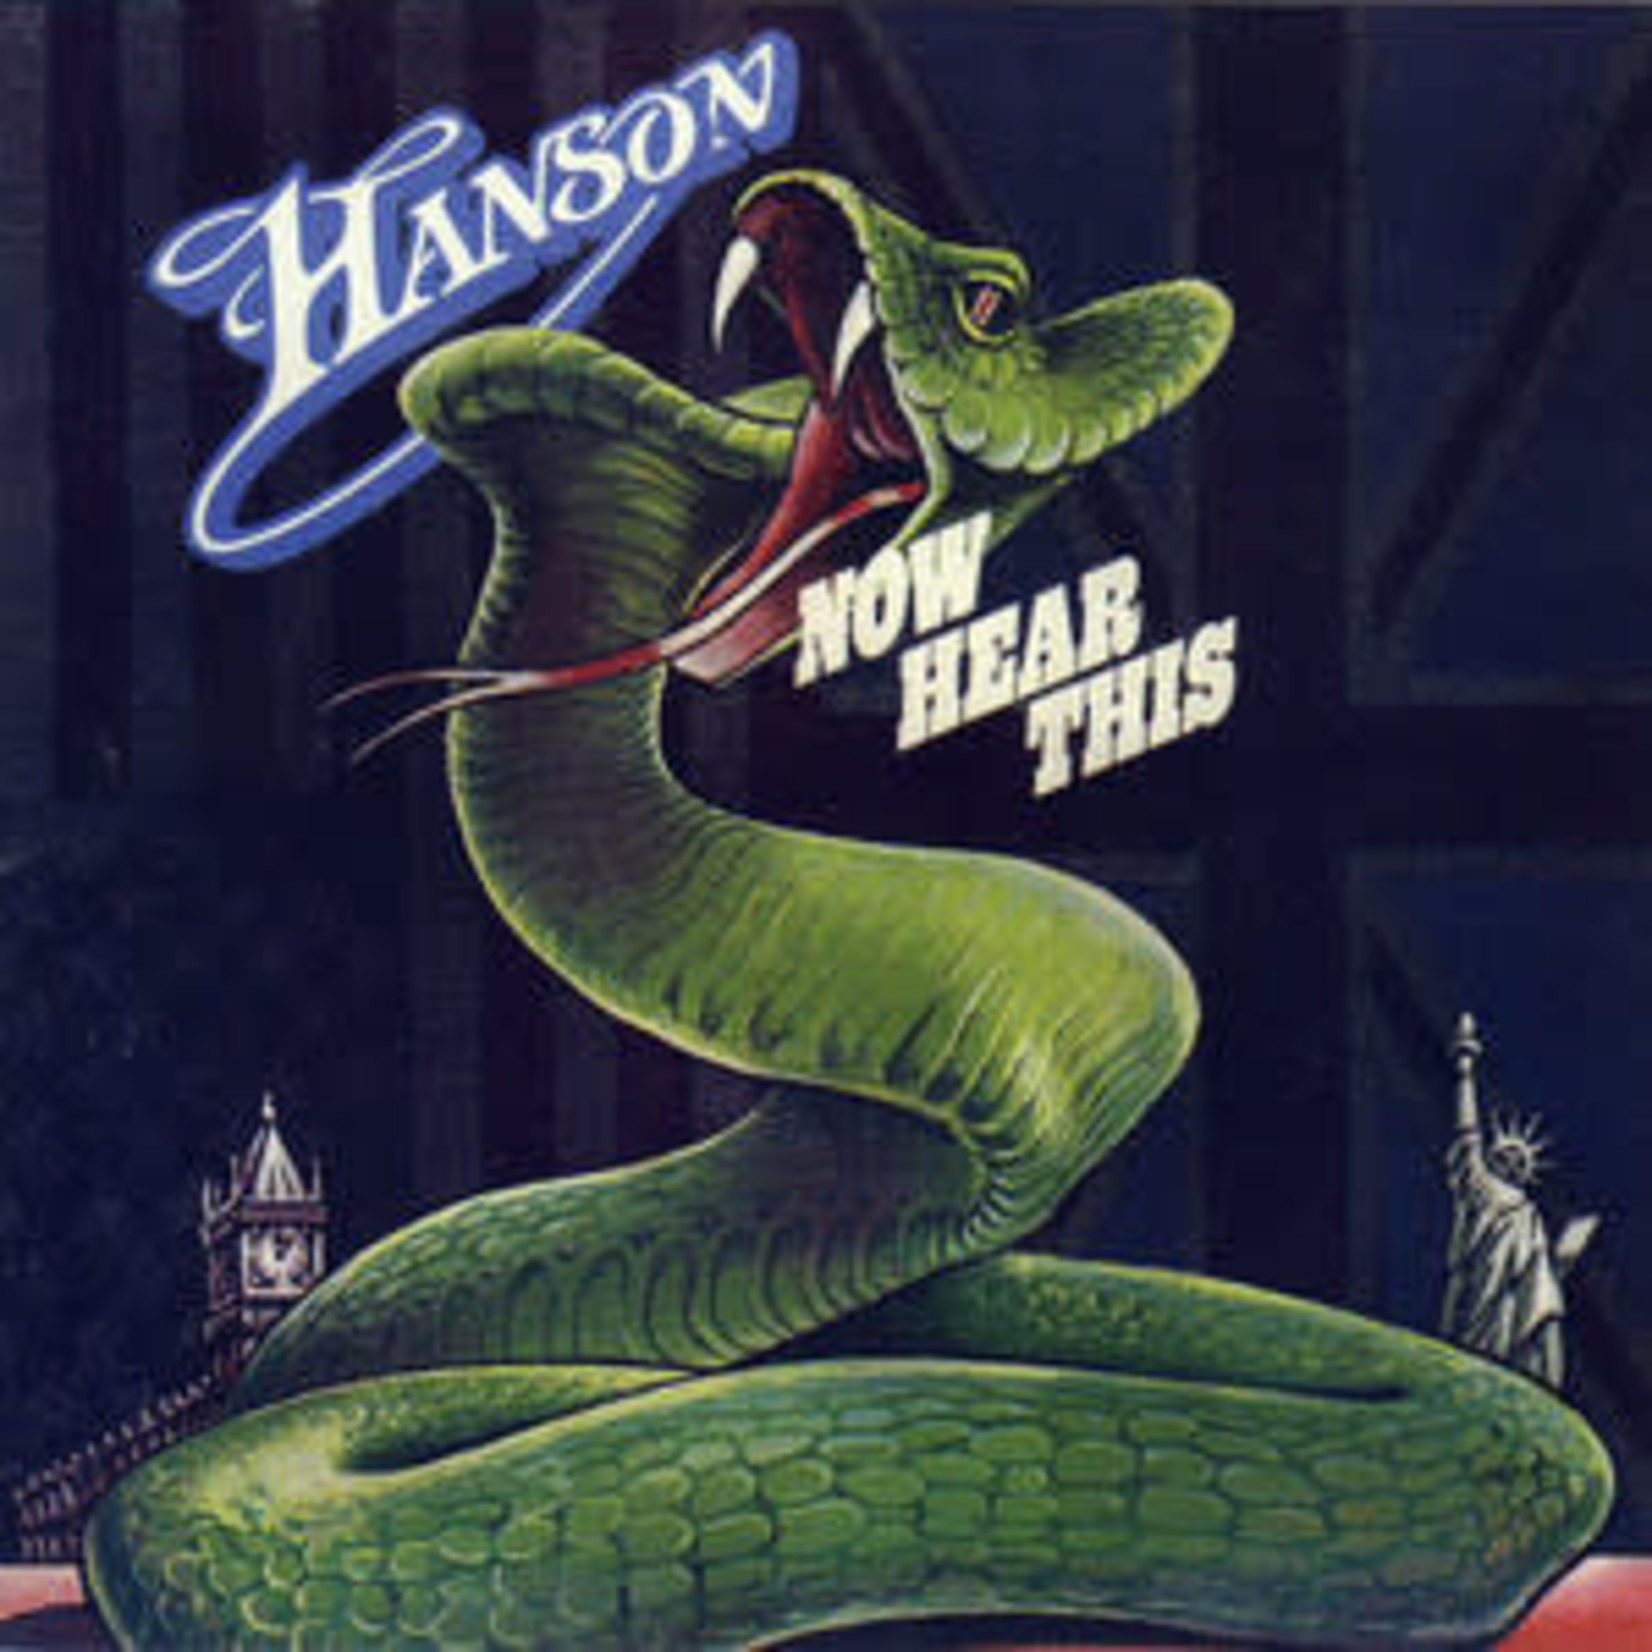 [Vintage] Hanson - Now Hear This